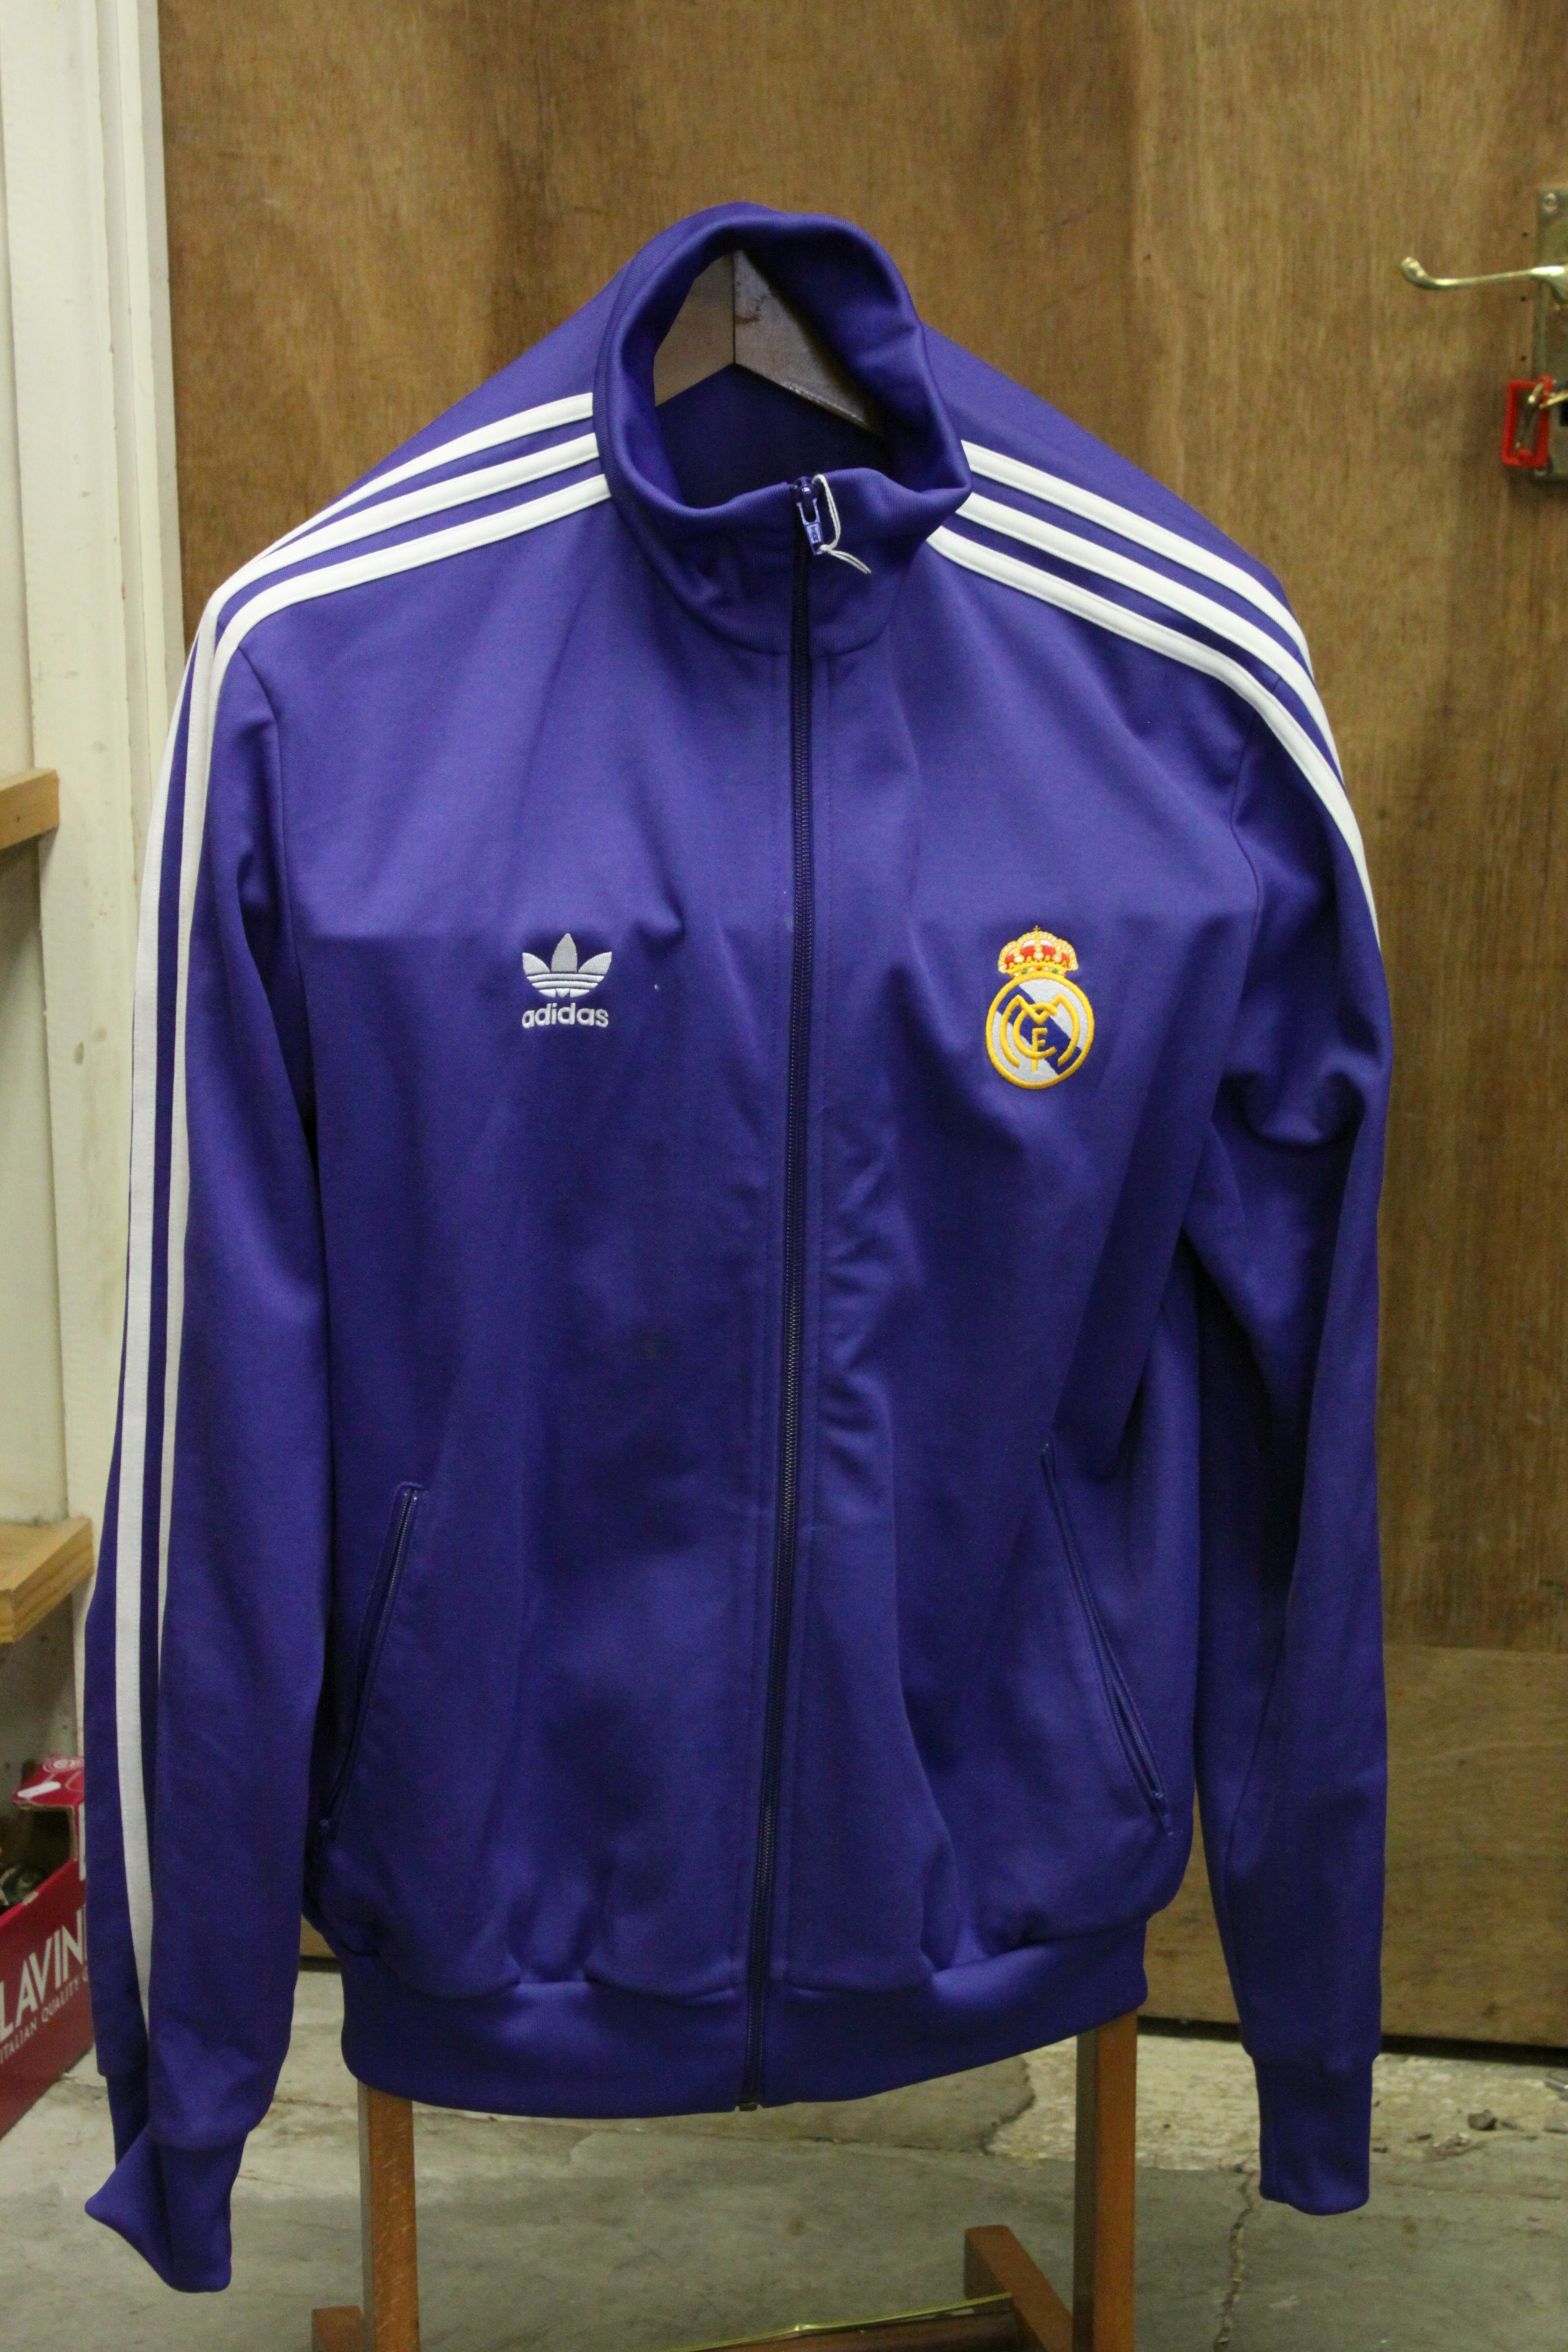 An Original Adidas Real Madrid football tracksuit top